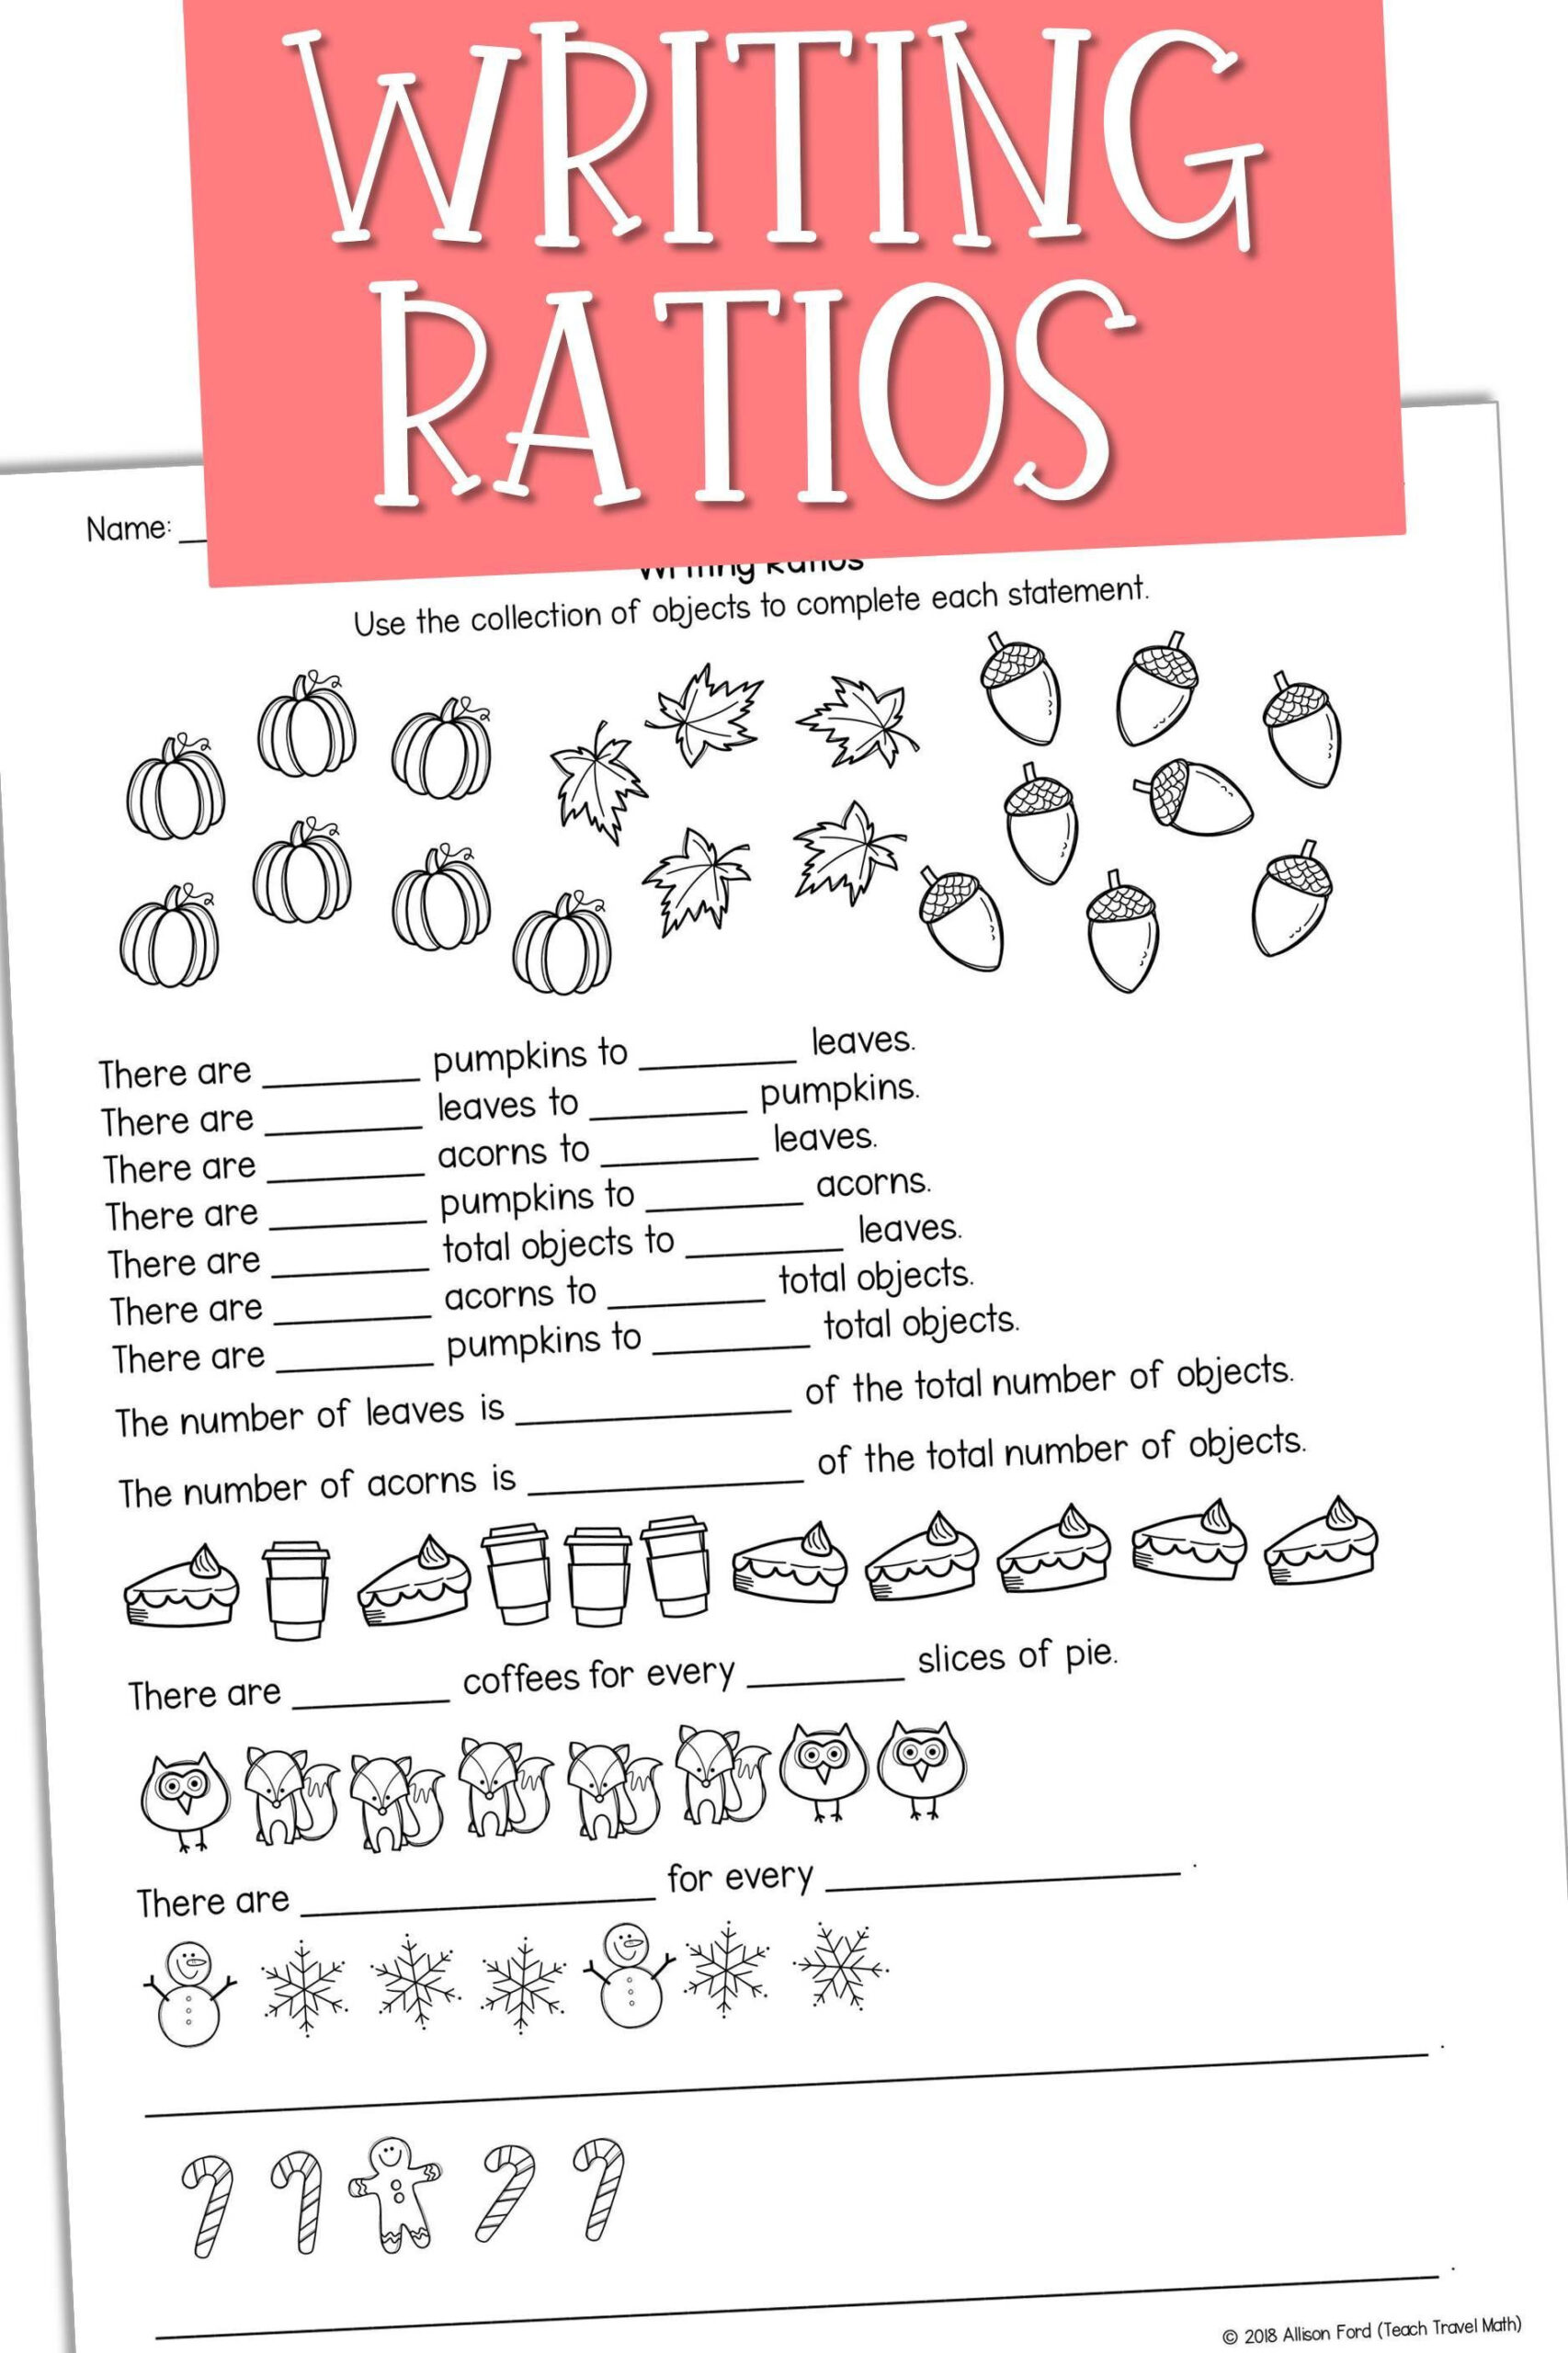 Writing Ratios Writing Ratios Teaching Math Writing